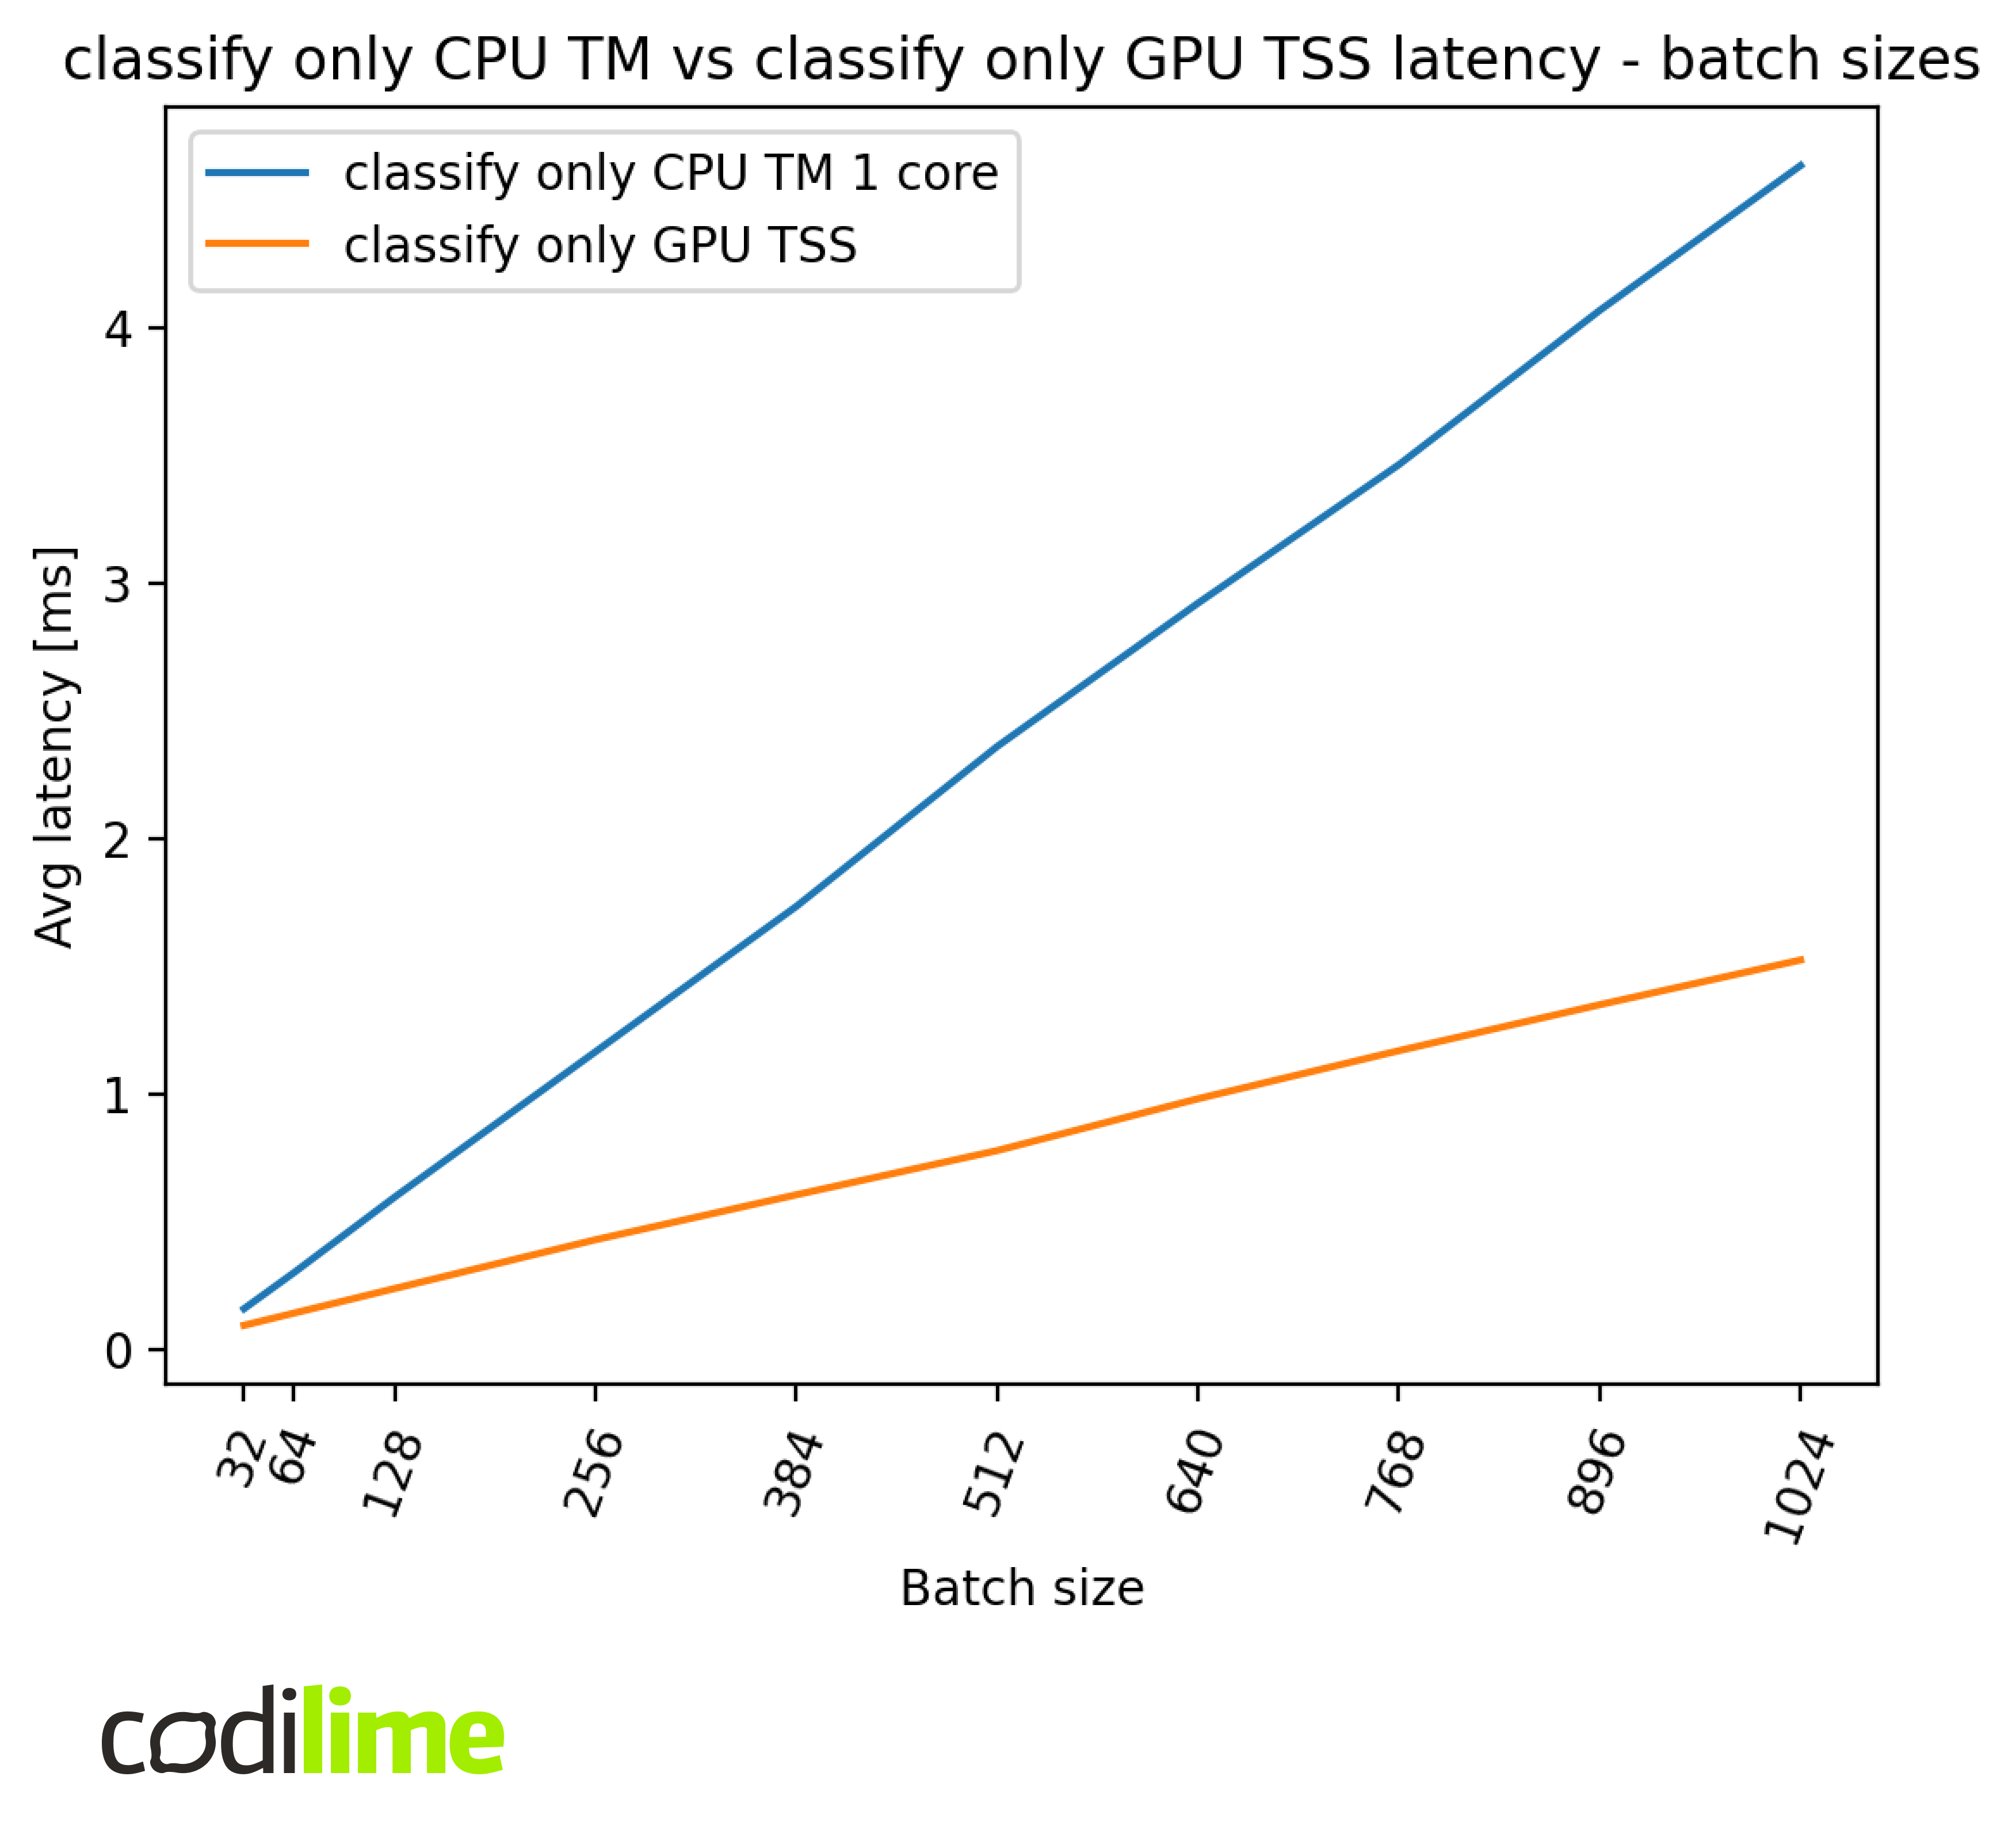 CPU TM vs GPU TSS latency batch sizes